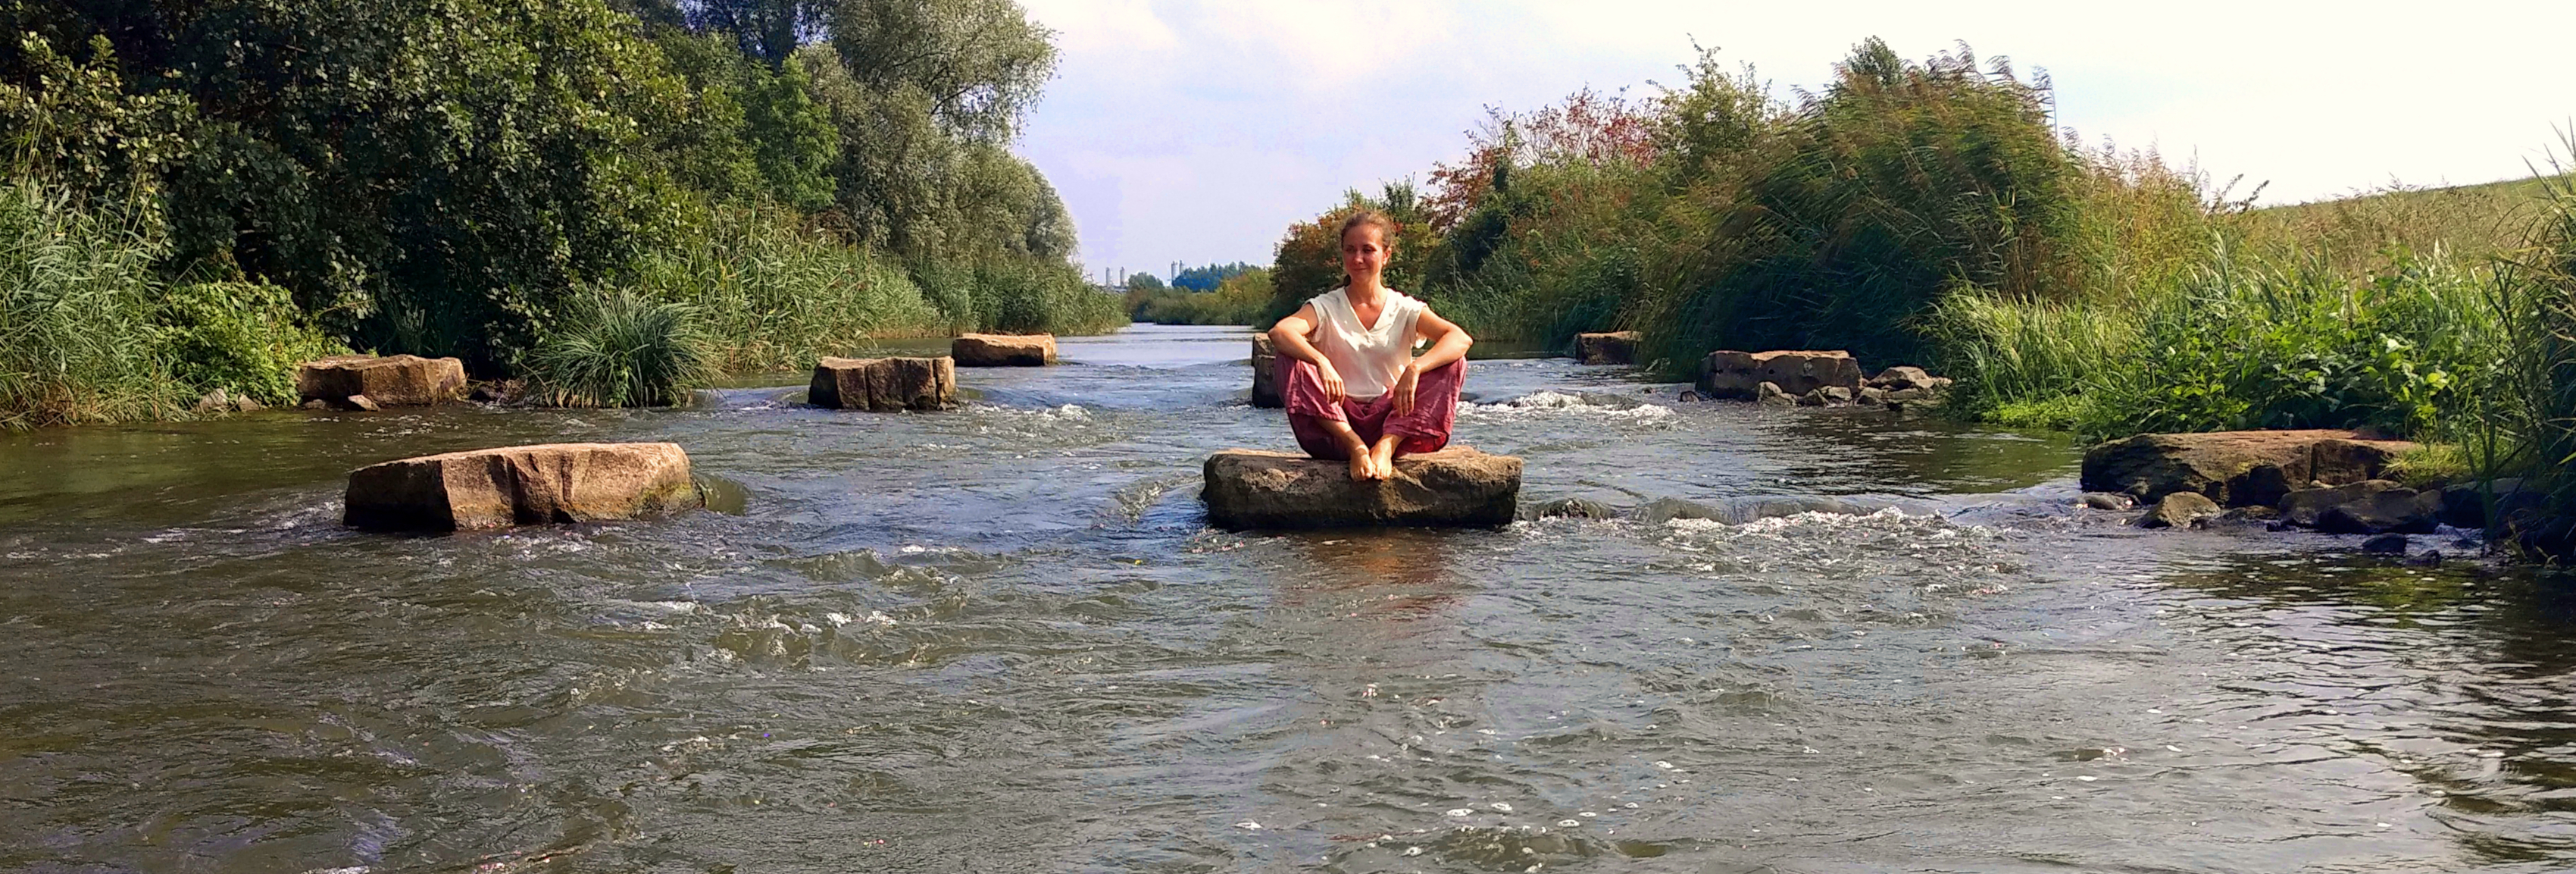 Bilder Lesen im Bewusstseinsfeld & Meditation – Natalia Dobrynina